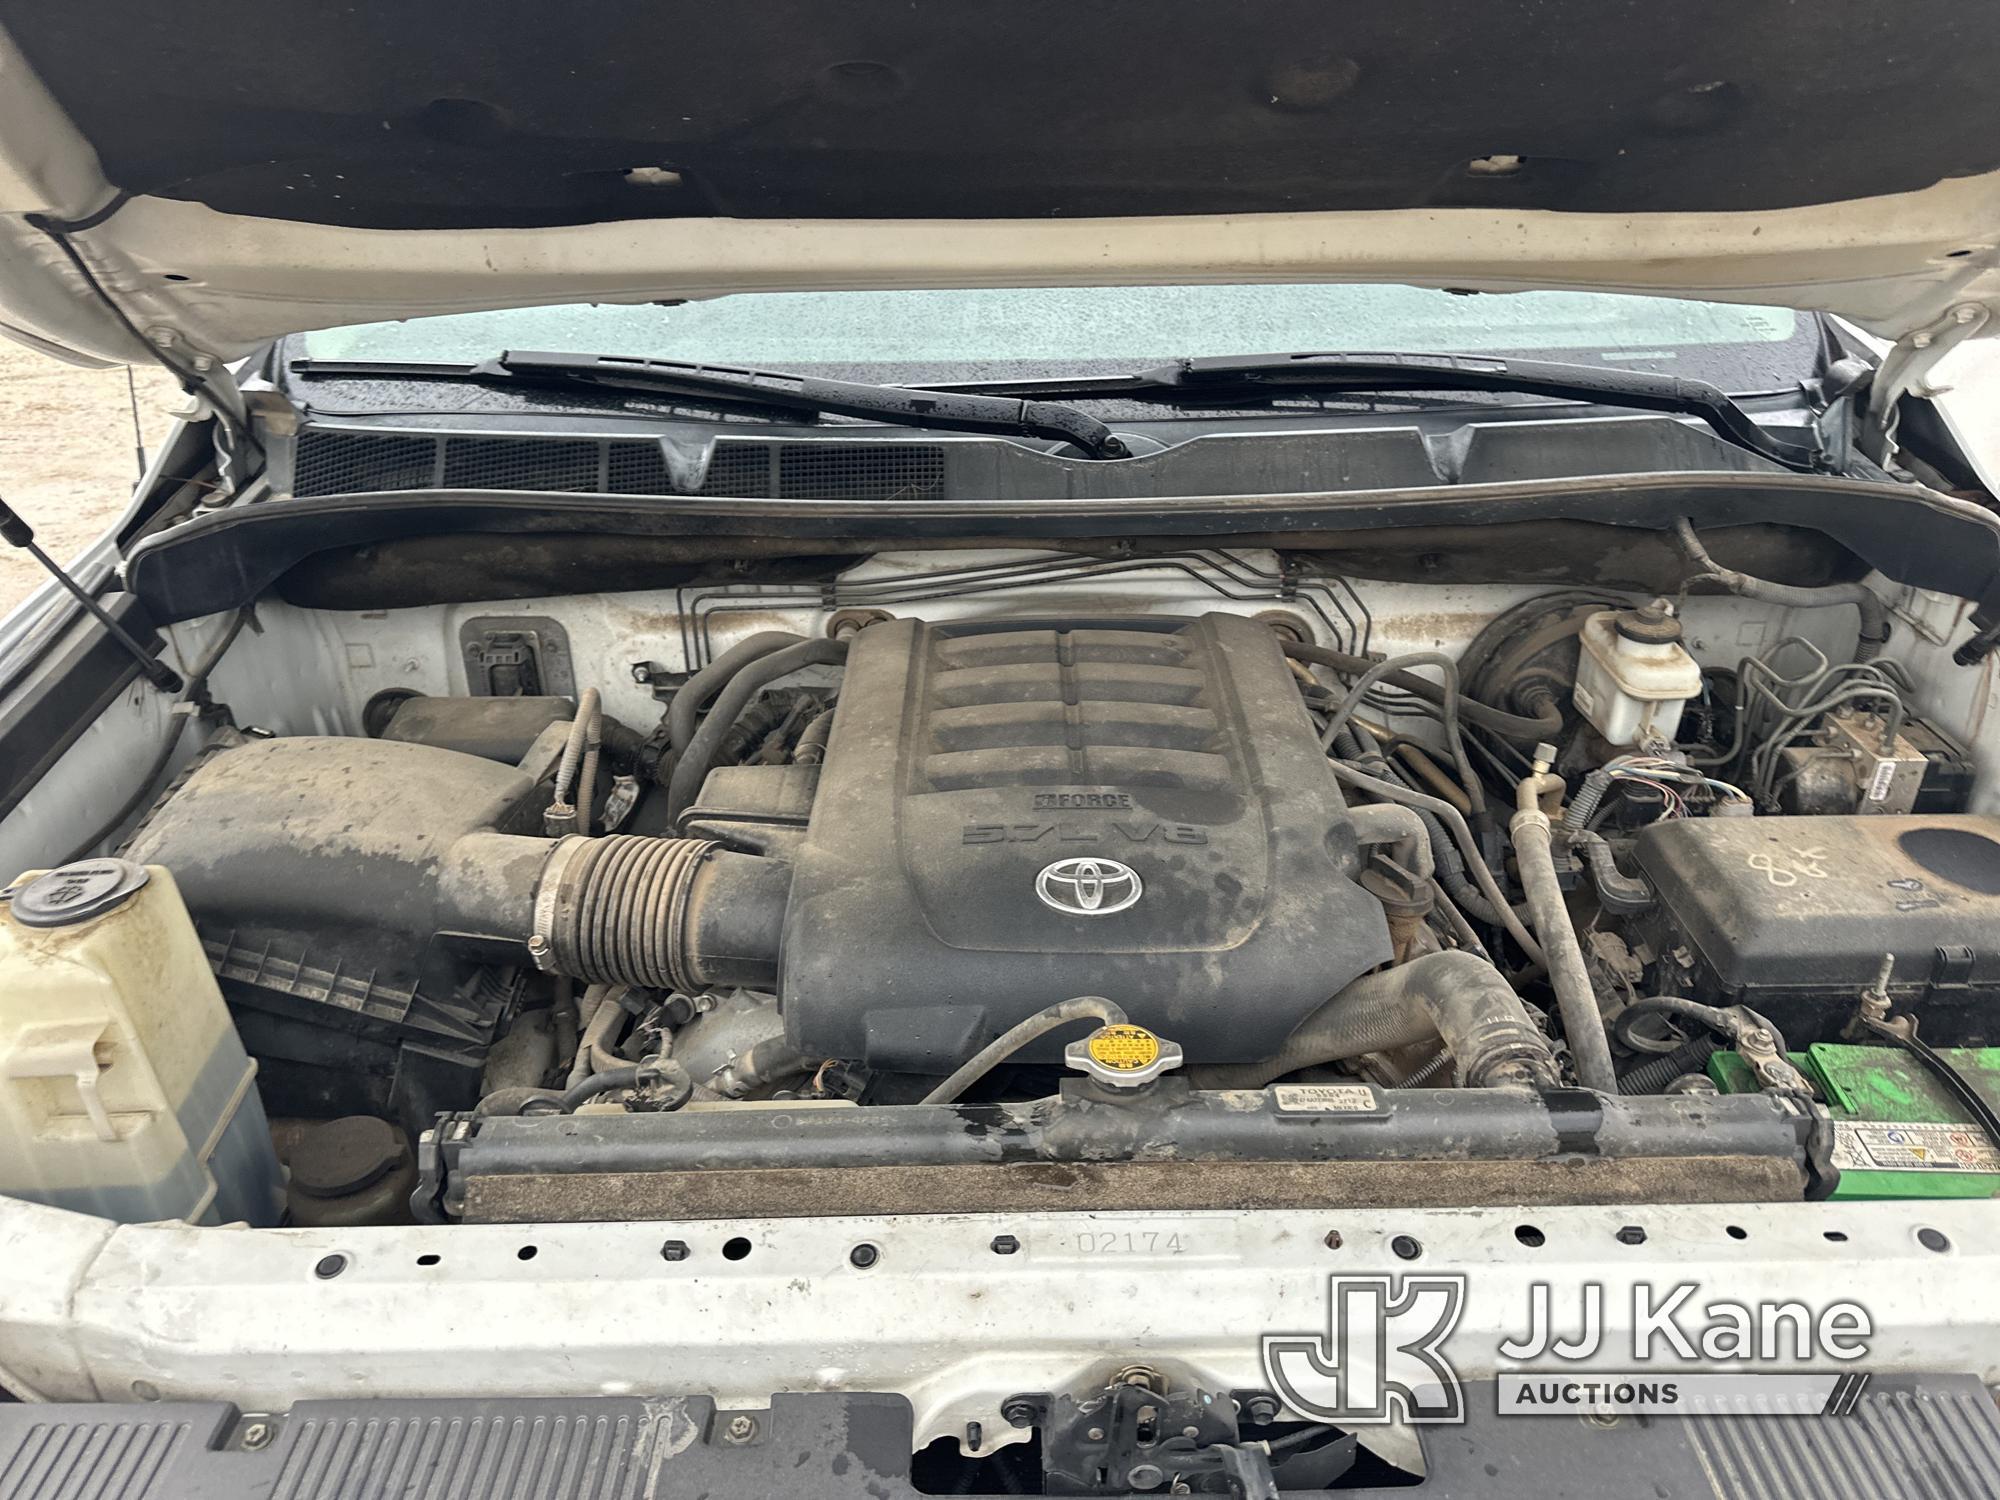 (Shelby, NC) 2015 Toyota Tundra 4x4 Crew-Cab Pickup Truck Runs & Moves) (Check Engine Light On